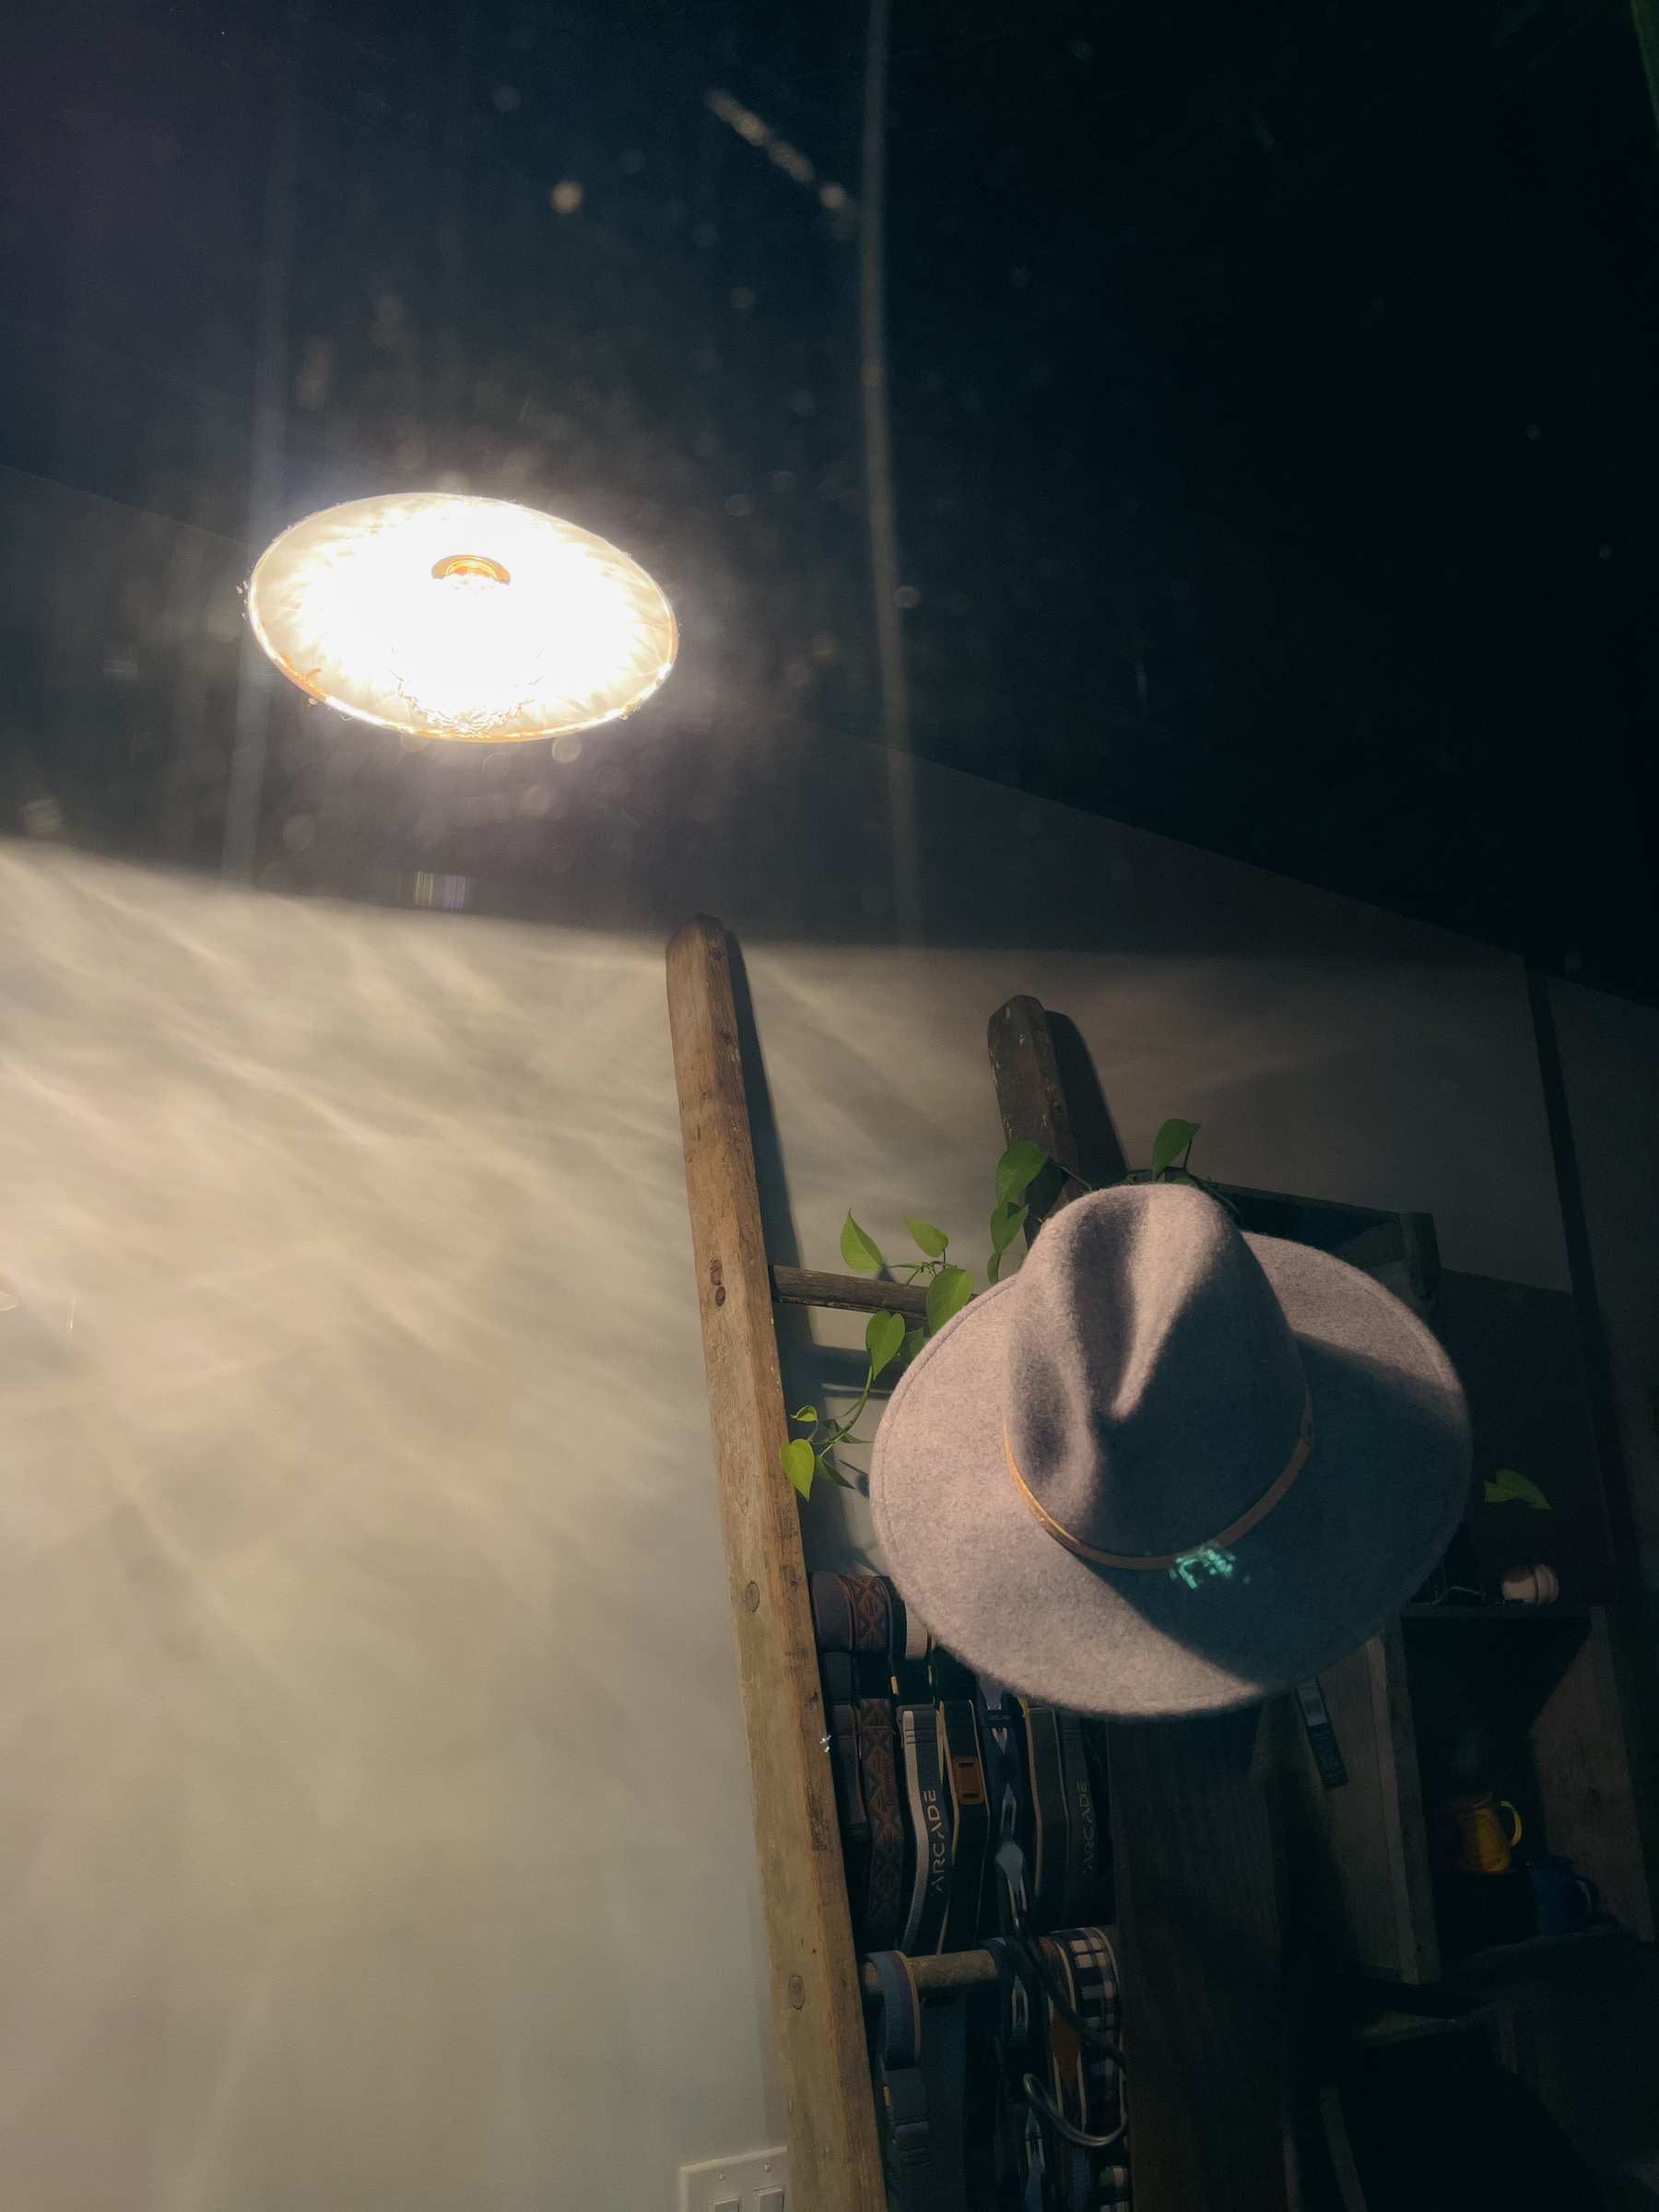 Felt hat and lamp in a shop window, lamp illuminating hat.